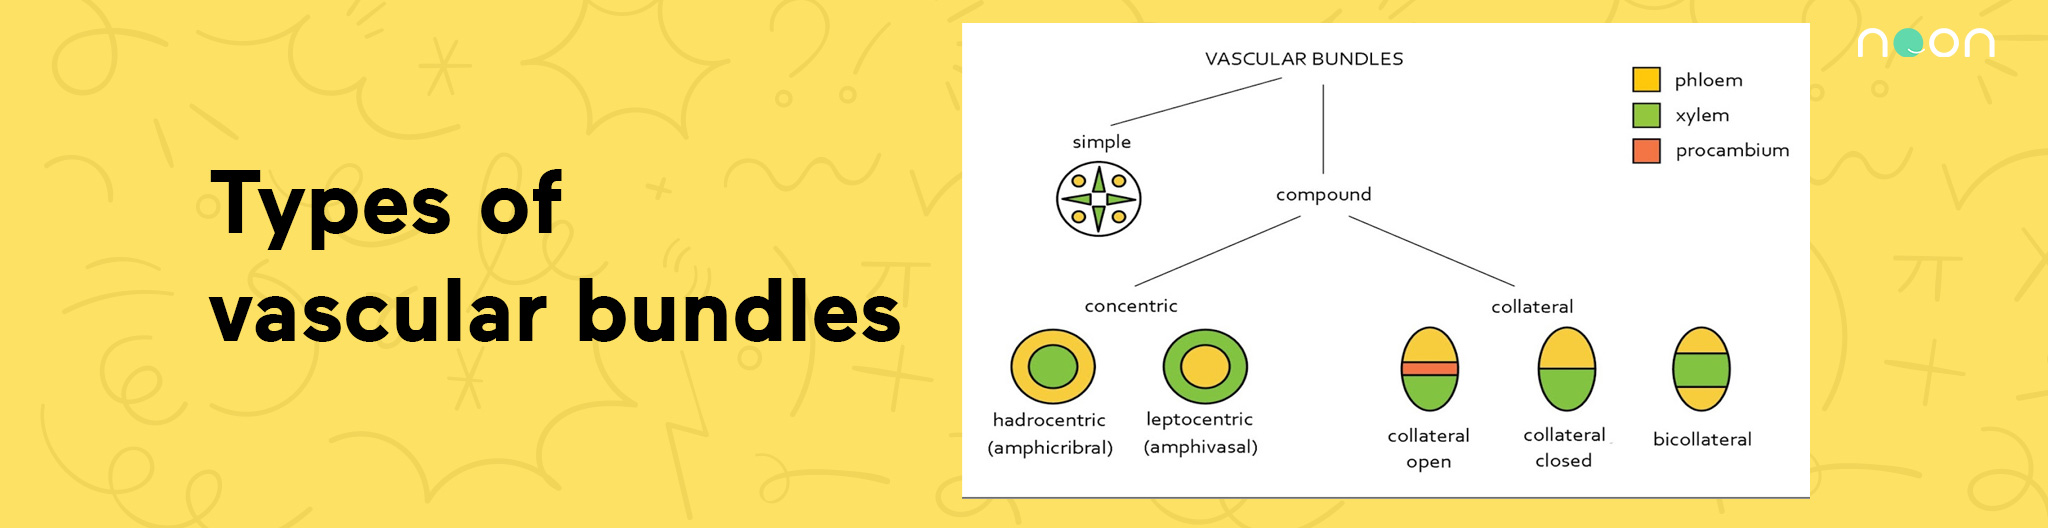 Types of vascular bundles